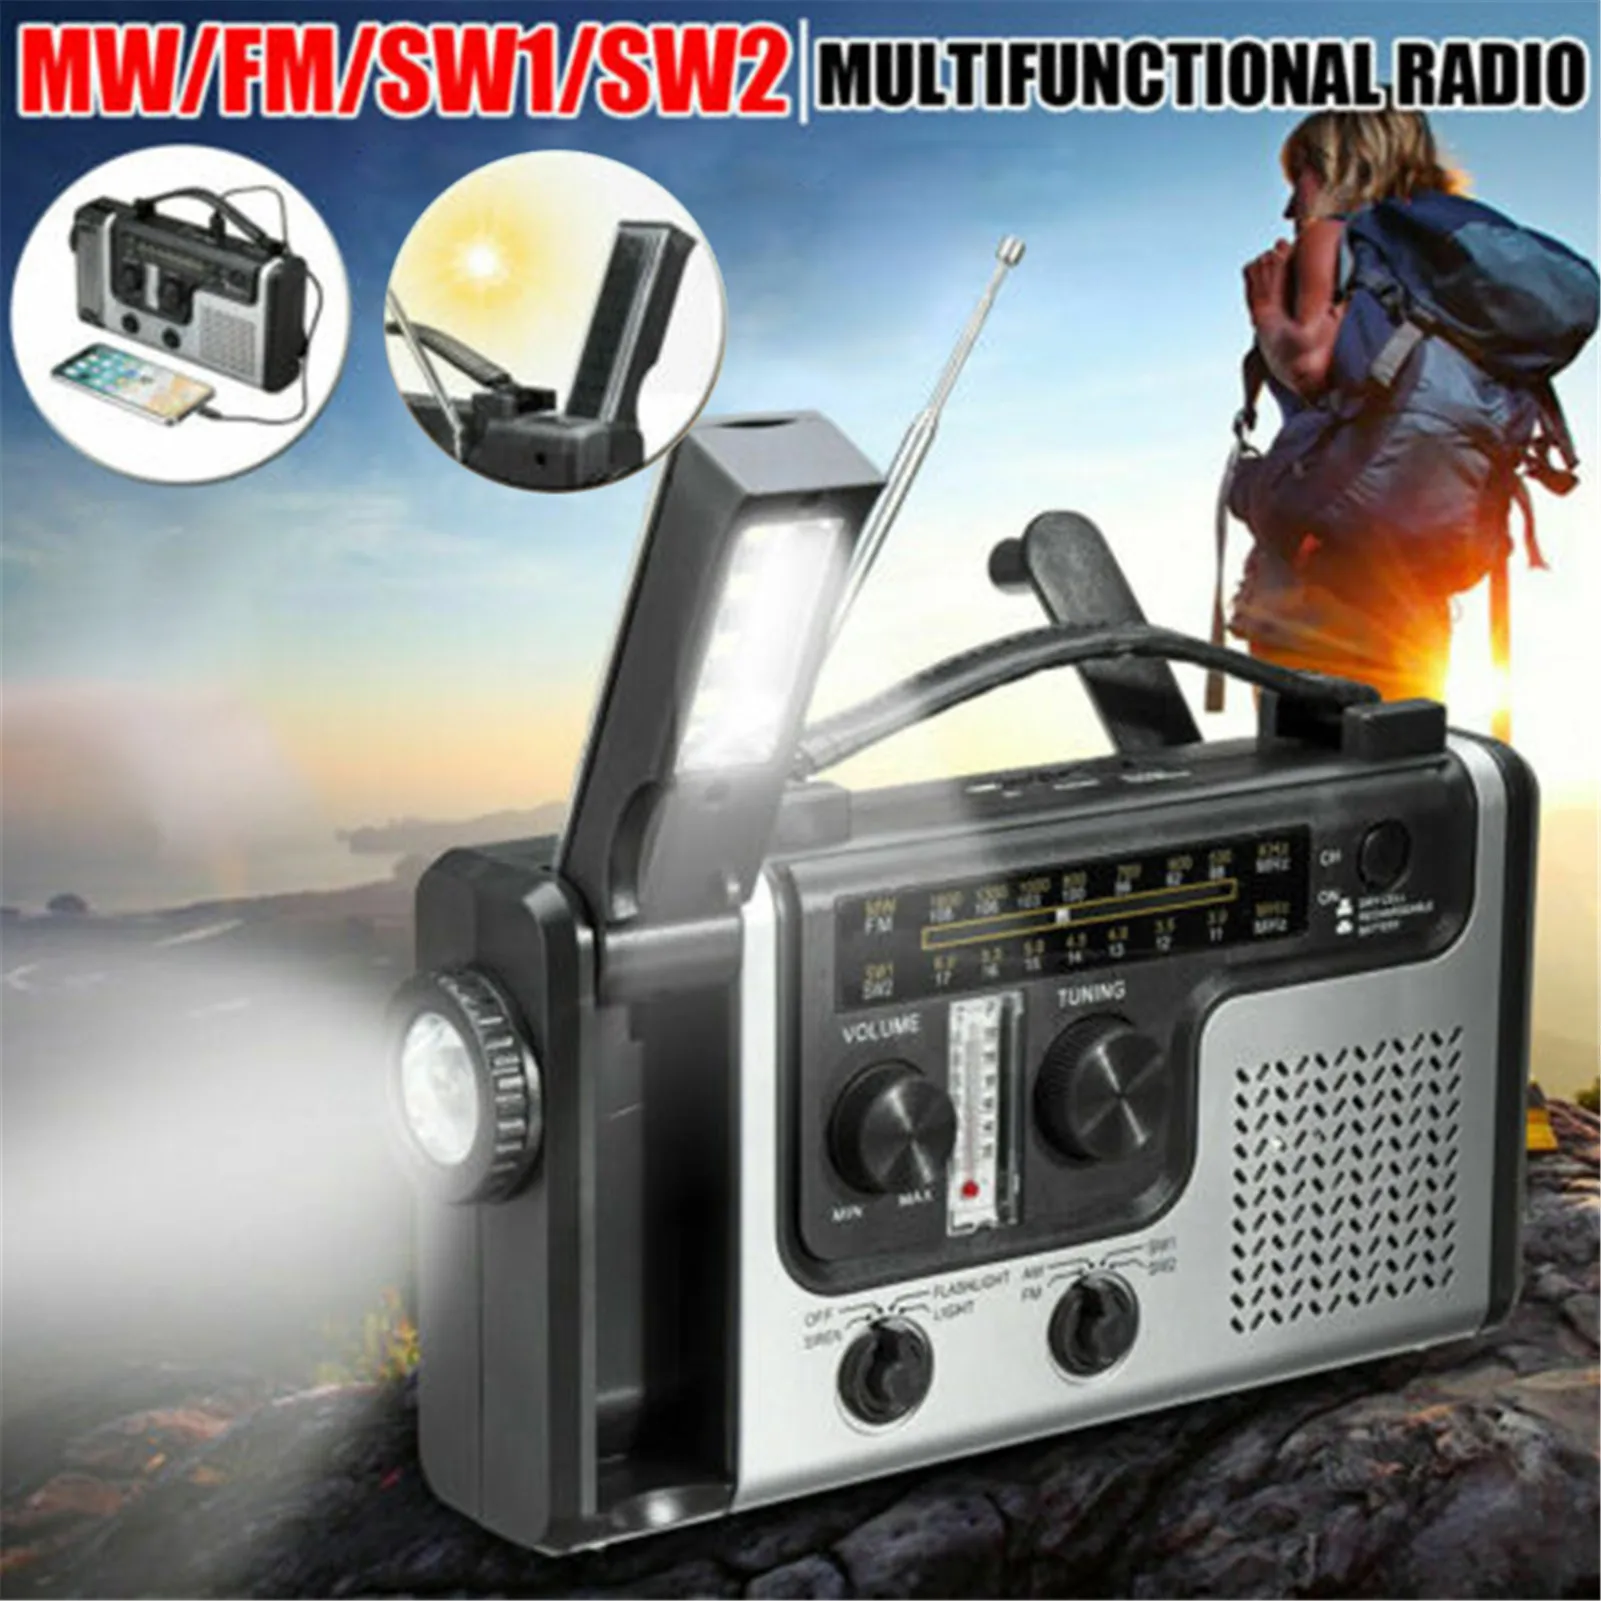 

Hand Crank Solar Emergency Radio AM/FM/SW1/SW2 With Survival Flashlight Thermometer LED Lamp Outdoor 1200mAh Weather Radio